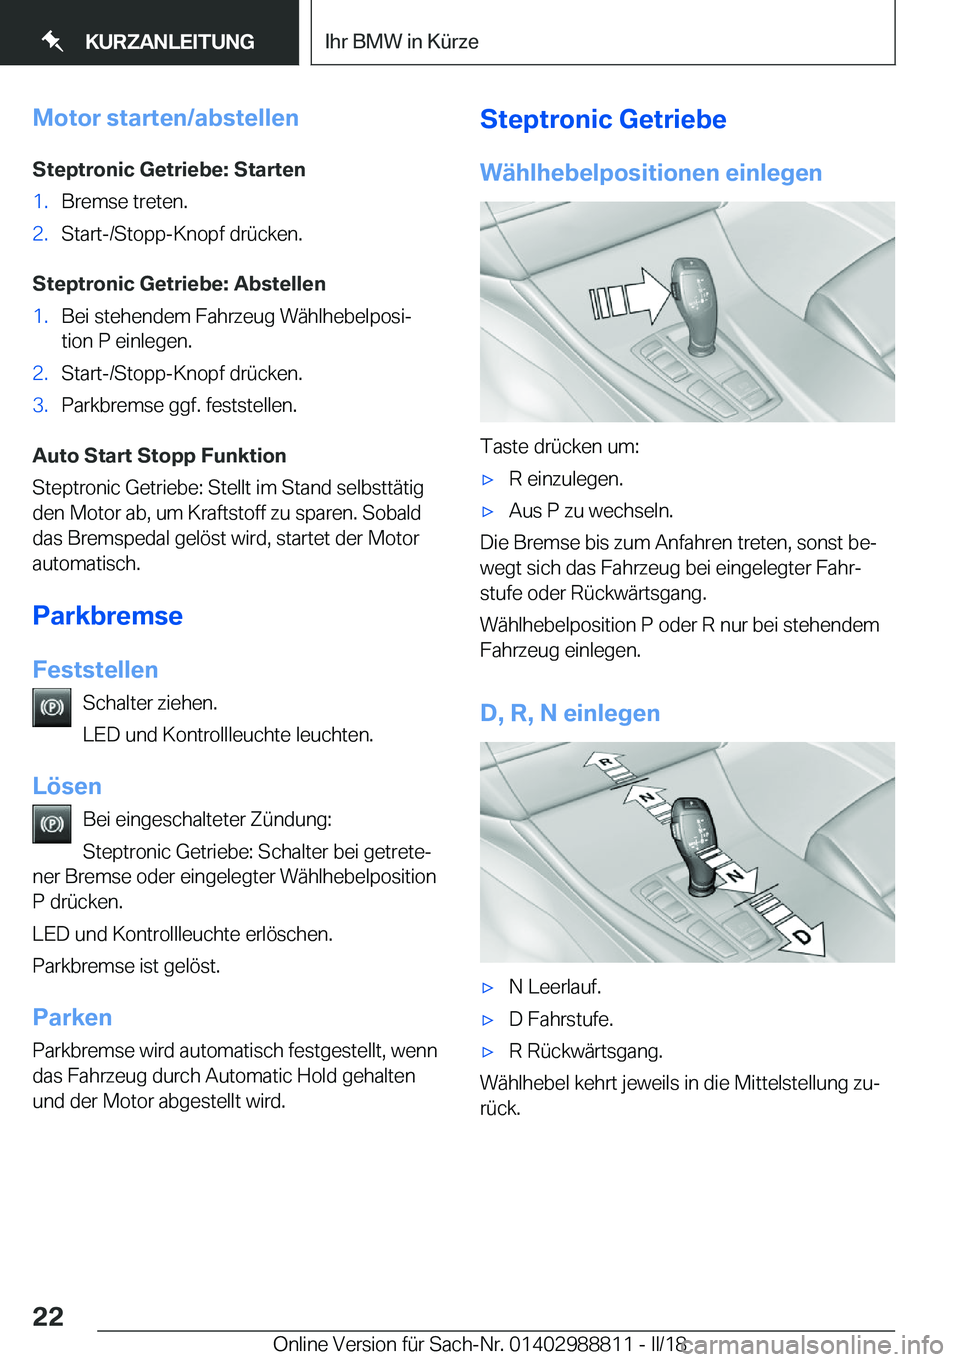 BMW X5 2018  Betriebsanleitungen (in German) �M�o�t�o�r��s�t�a�r�t�e�n�/�a�b�s�t�e�l�l�e�n
�S�t�e�p�t�r�o�n�i�c��G�e�t�r�i�e�b�e�:��S�t�a�r�t�e�n�1�.�B�r�e�m�s�e� �t�r�e�t�e�n�.�2�.�S�t�a�r�t�-�/�S�t�o�p�p�-�K�n�o�p�f� �d�r�